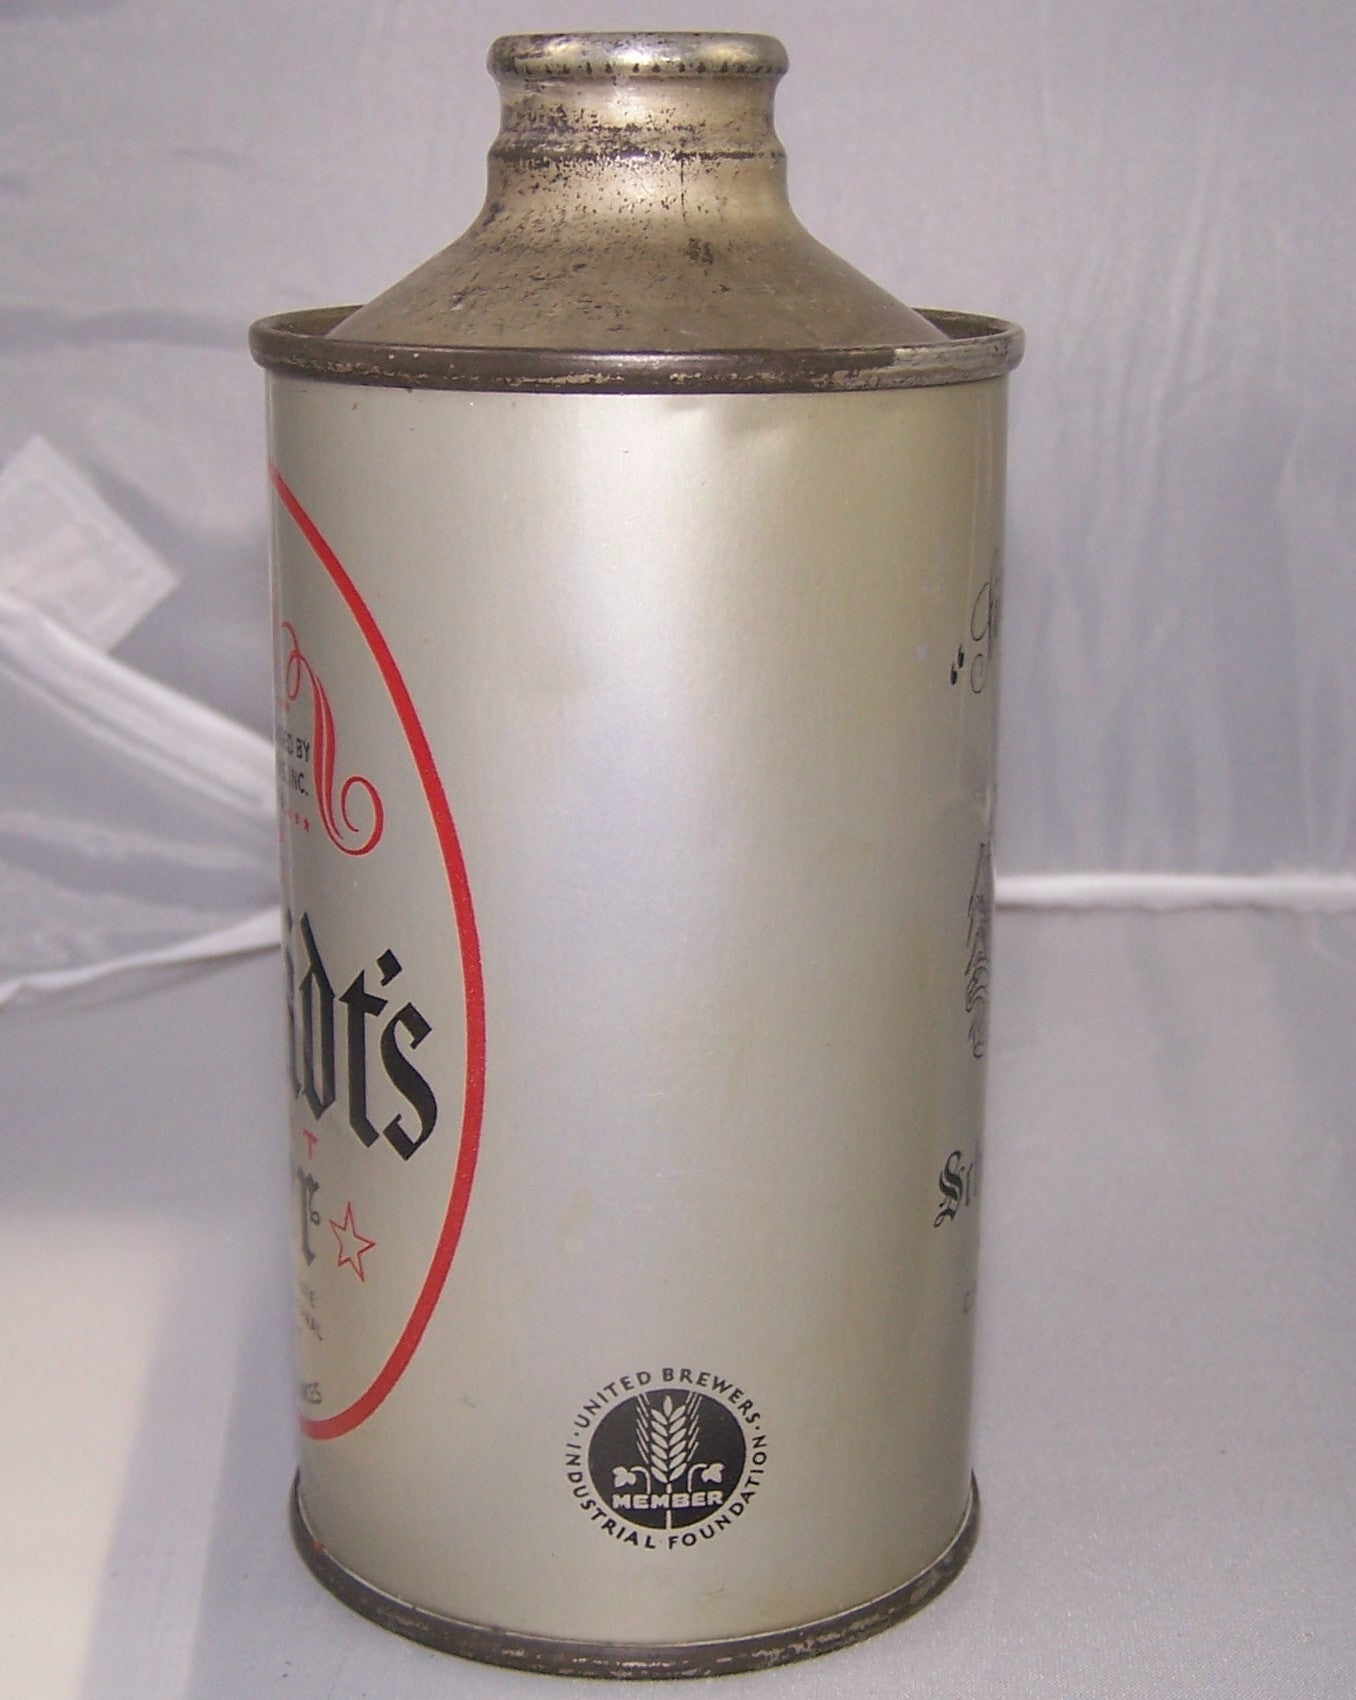 Schmidt's Light Beer J-Spout, USBC 184-30, Grade 1 Sold 2/18/15